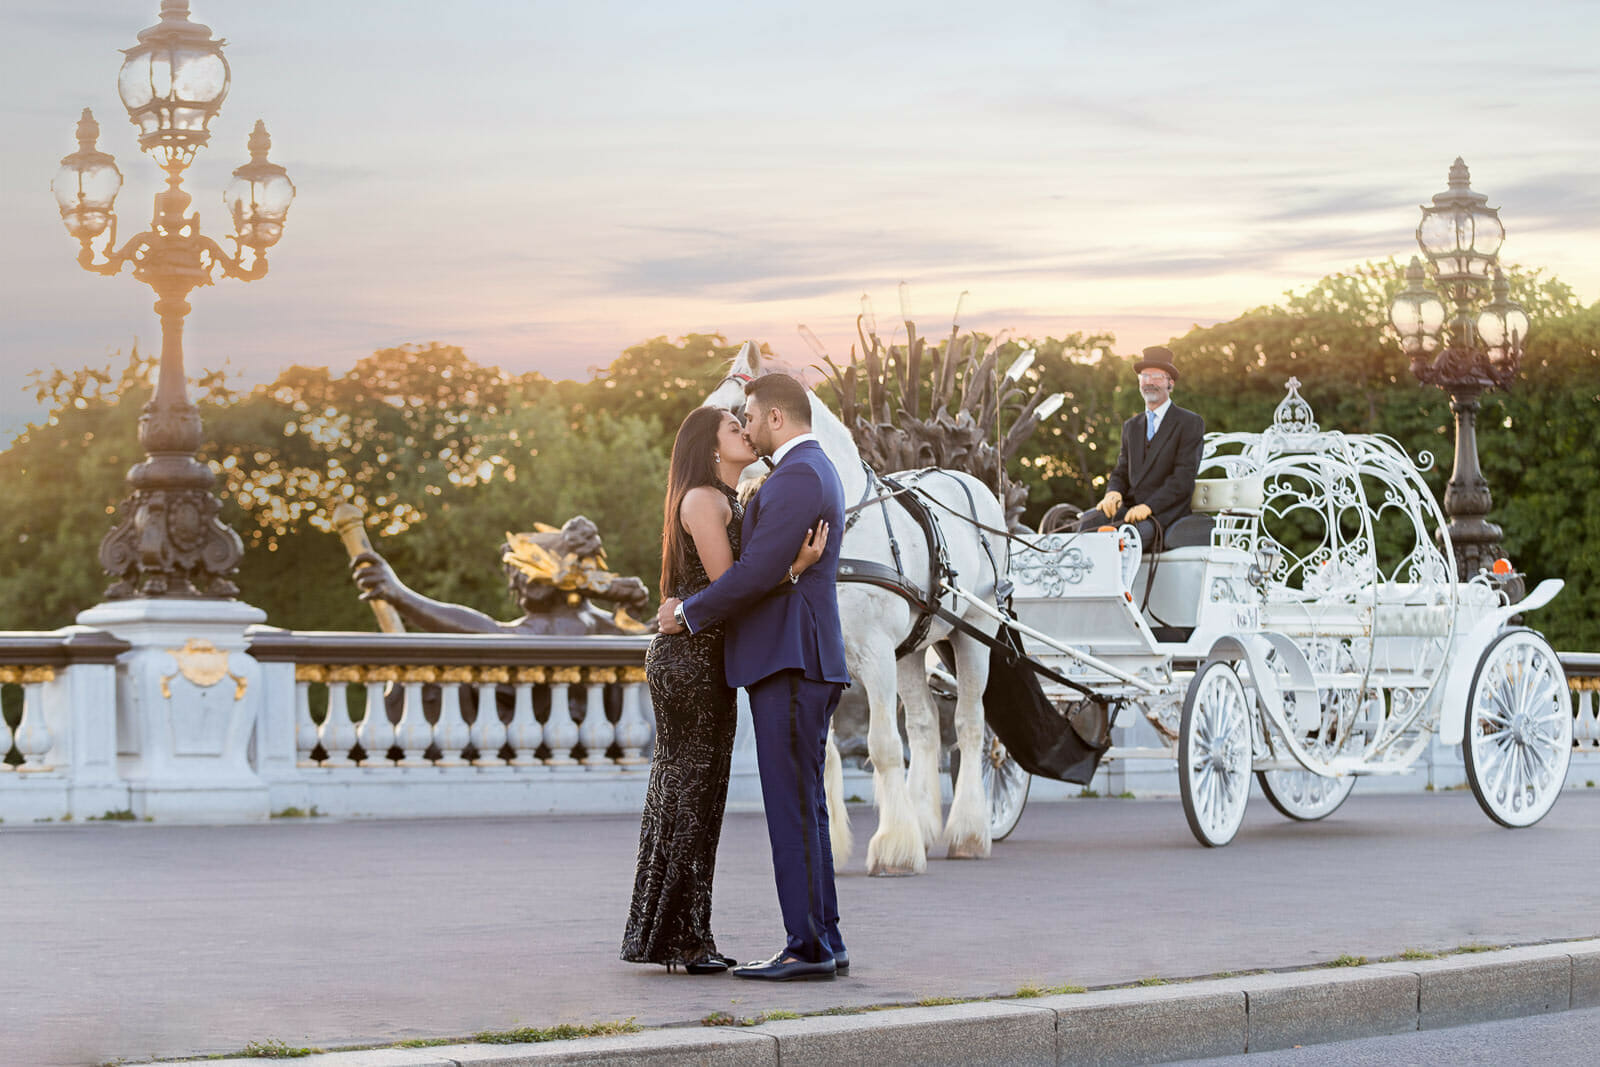 Romantic Paris proposal ideas with horse carriage at Alexander III Bridge